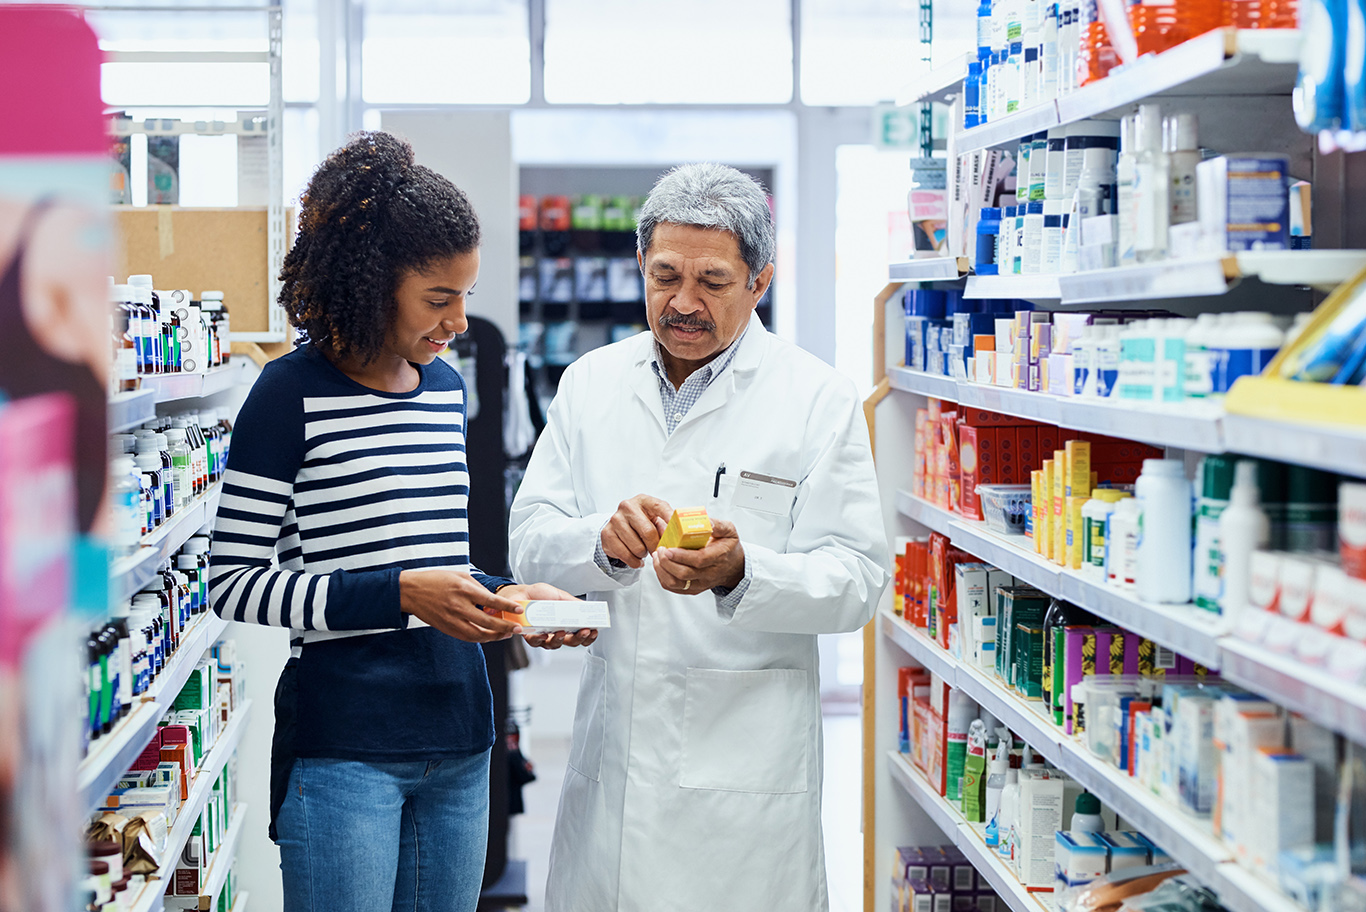 Consumer and pharmacist in pharmacy setting